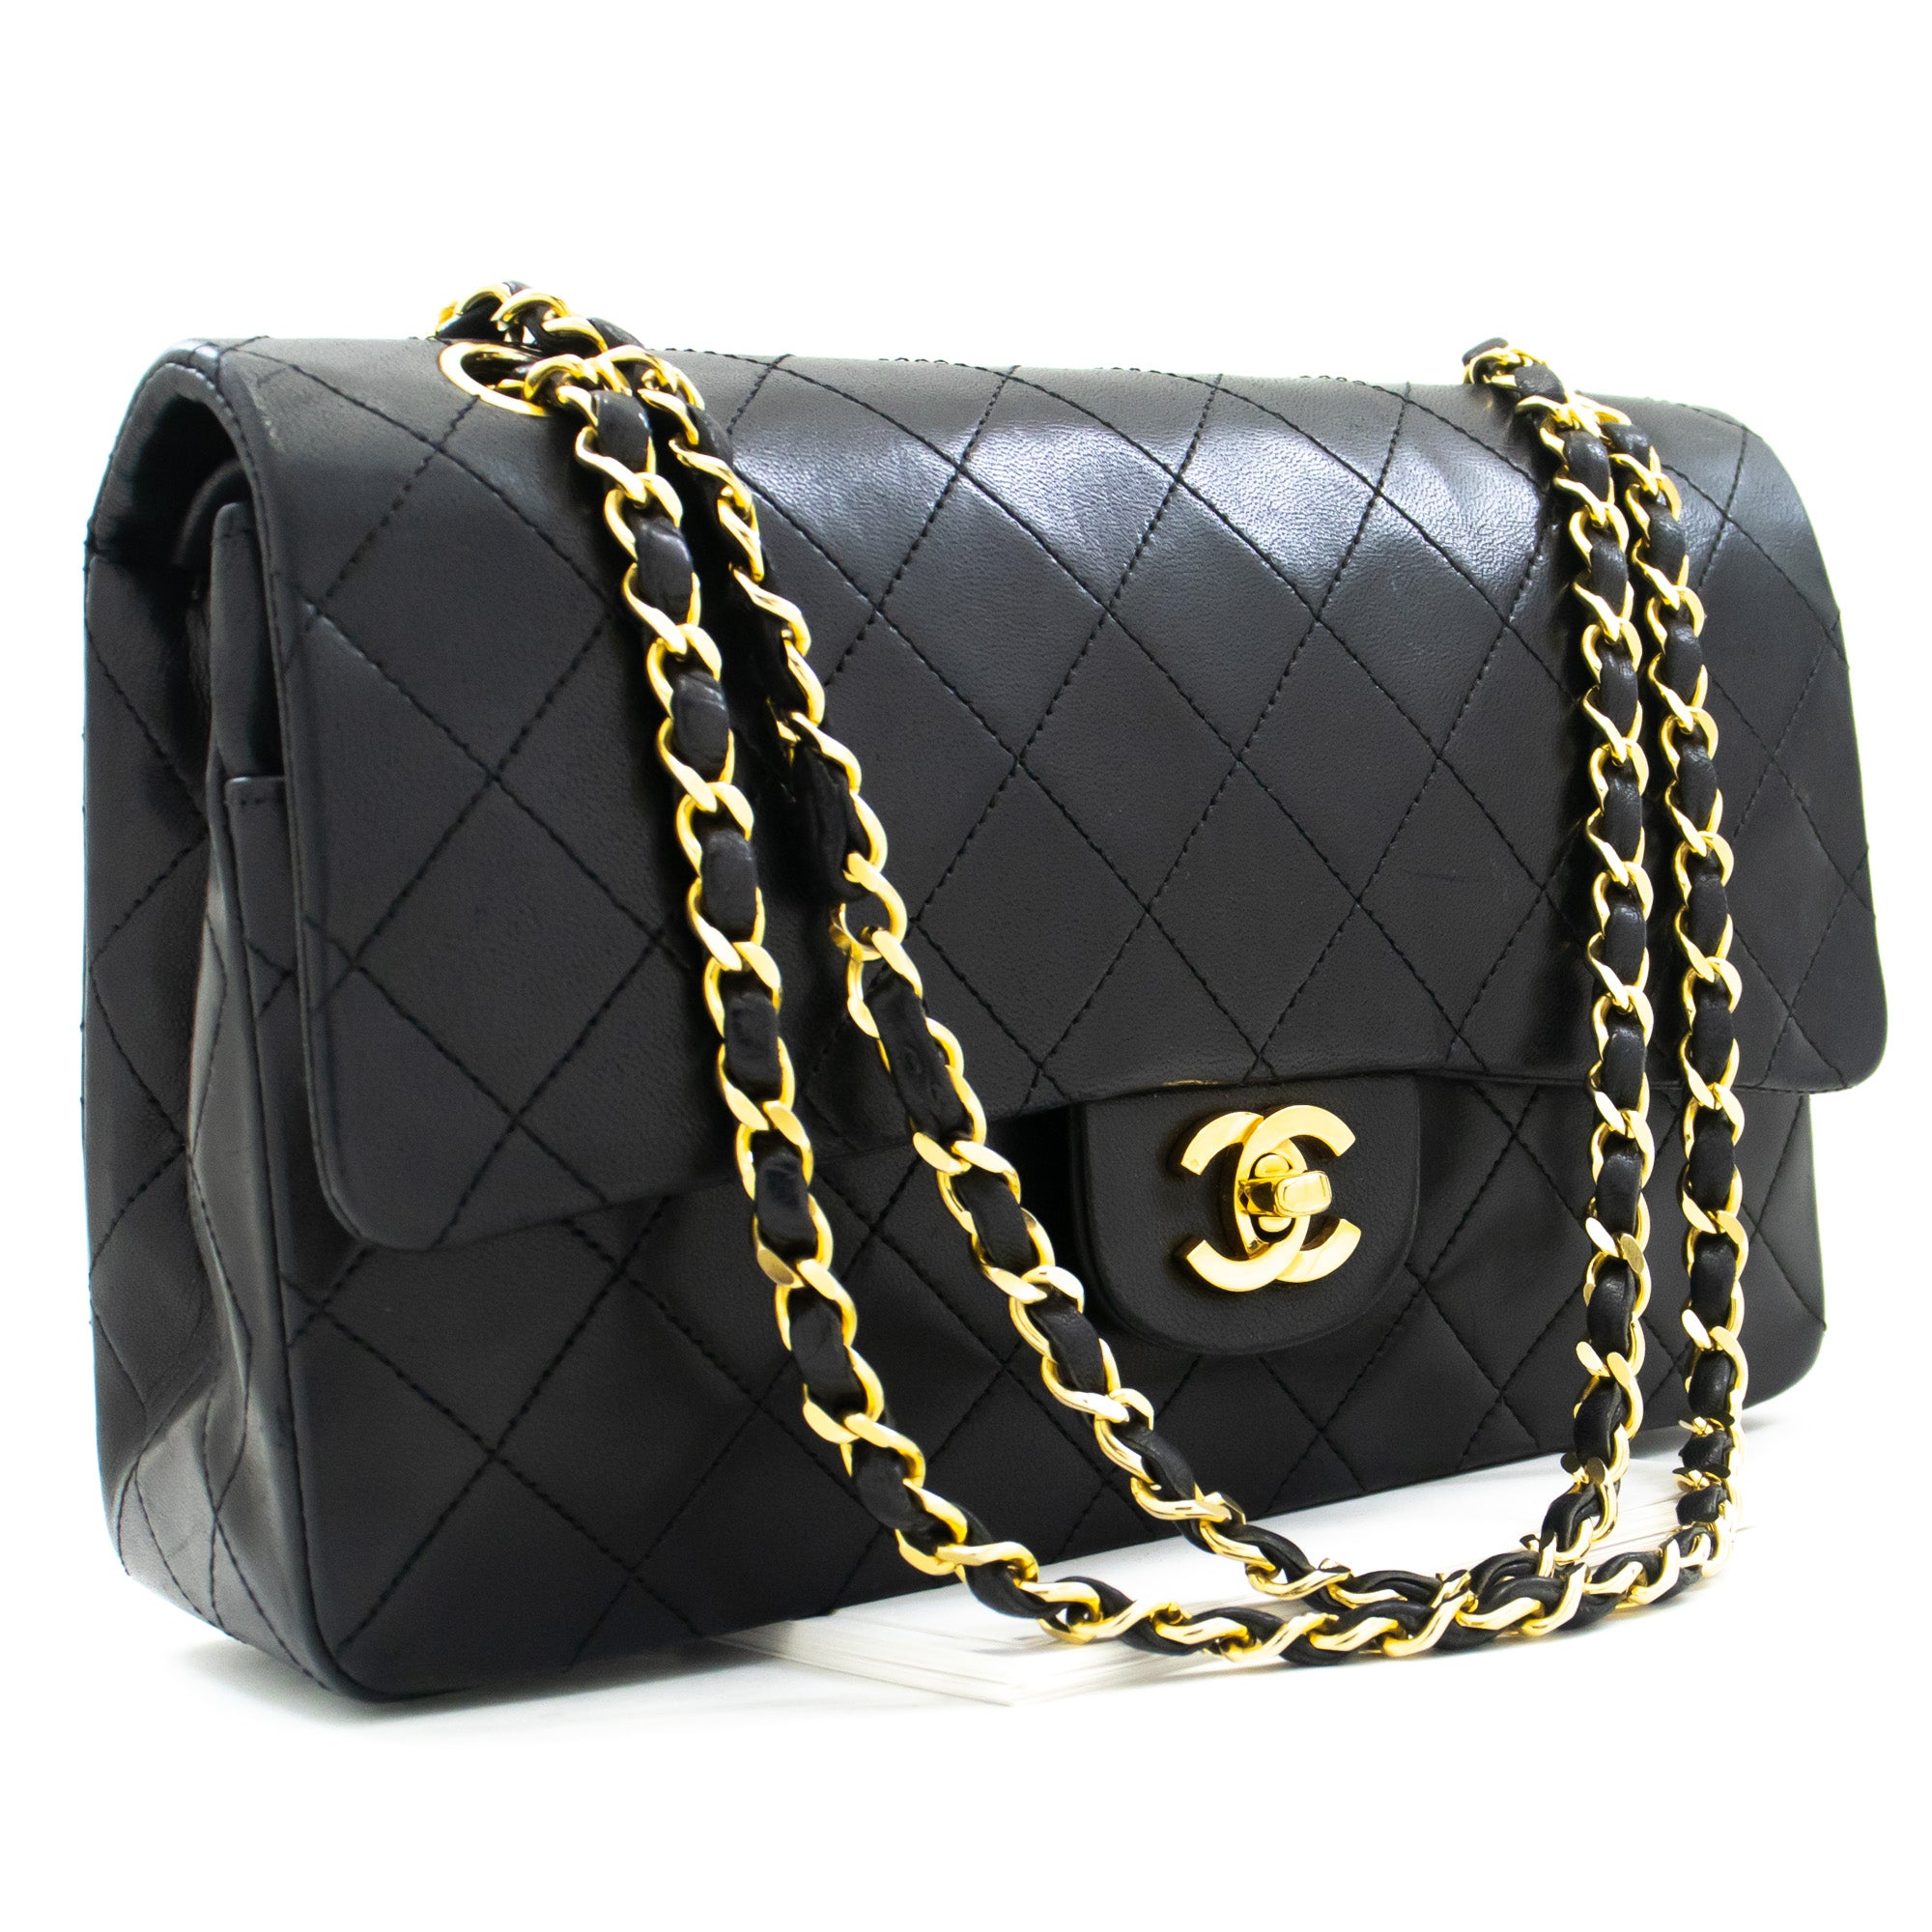 Chanel, Classic Double Flap Bag